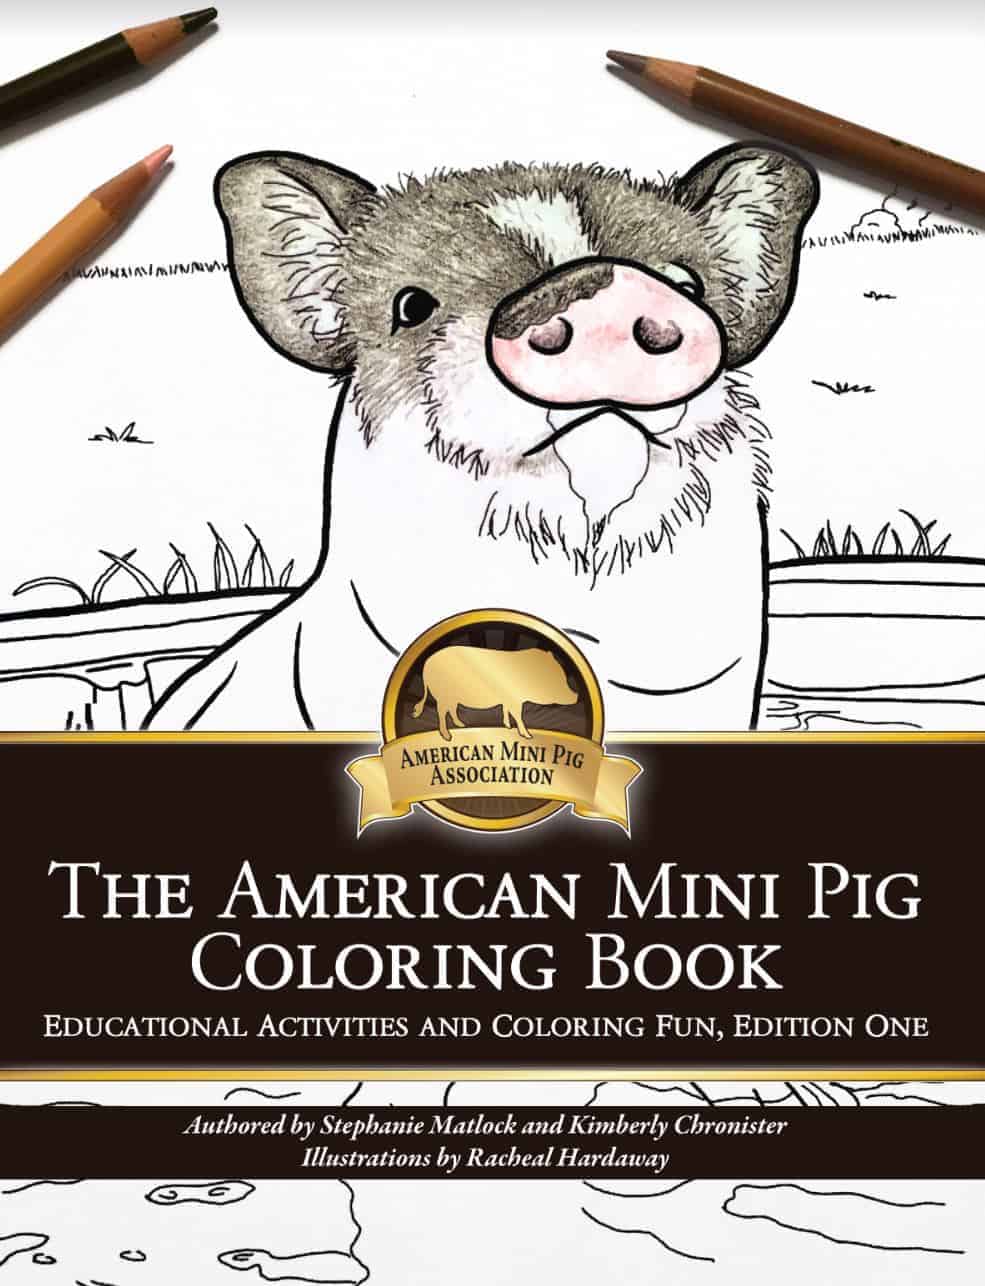 THE AMERICAN MINI PIG COLORING BOOK